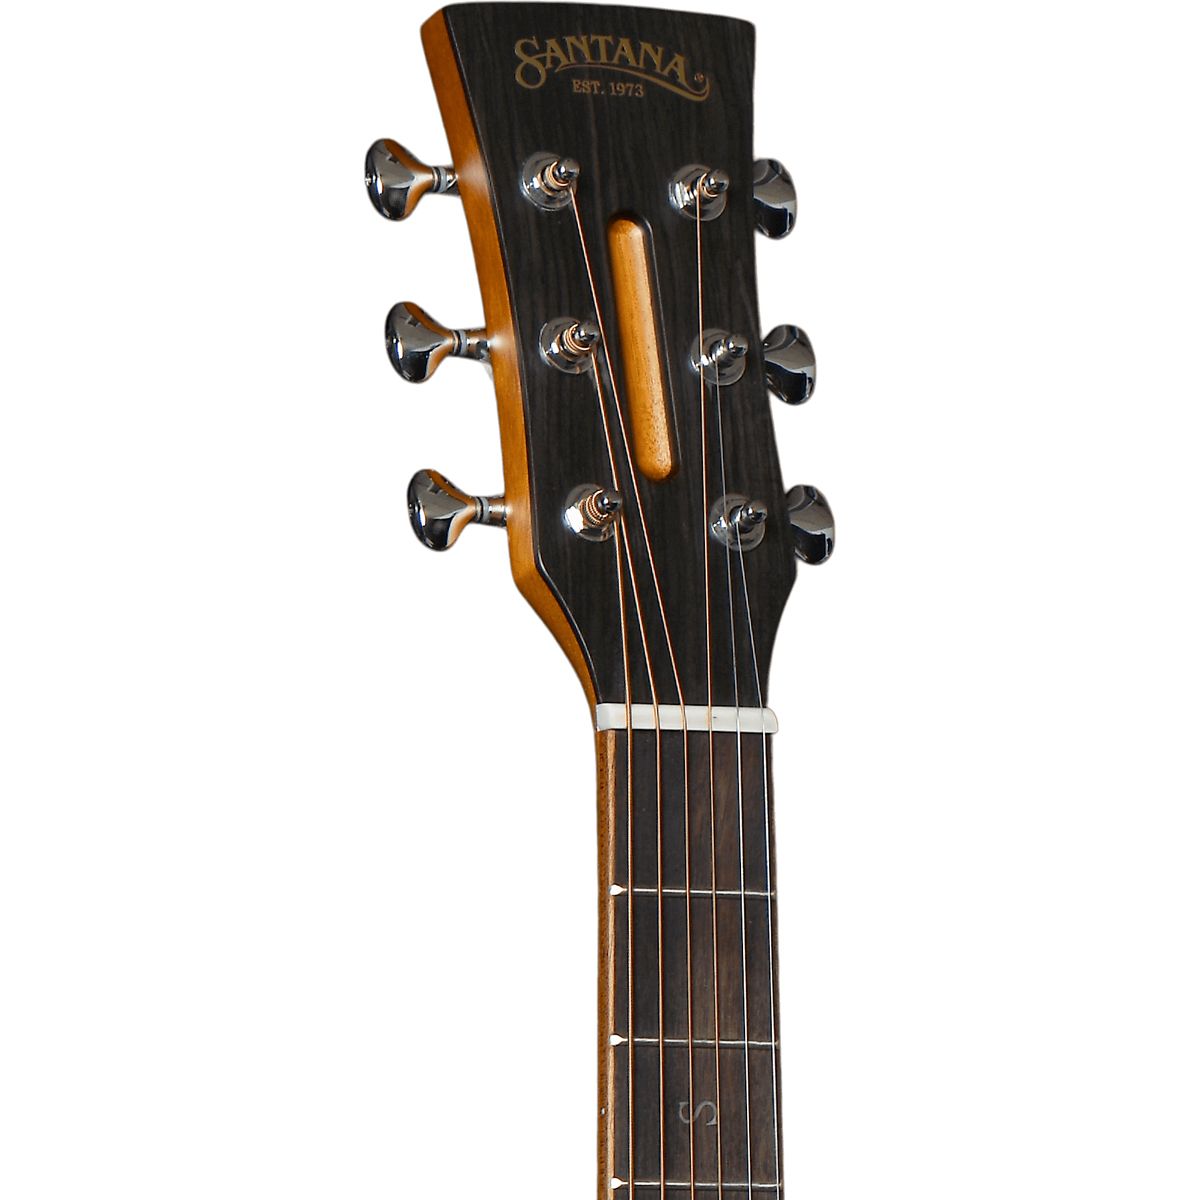 Santana Superb D72 Western Guitar